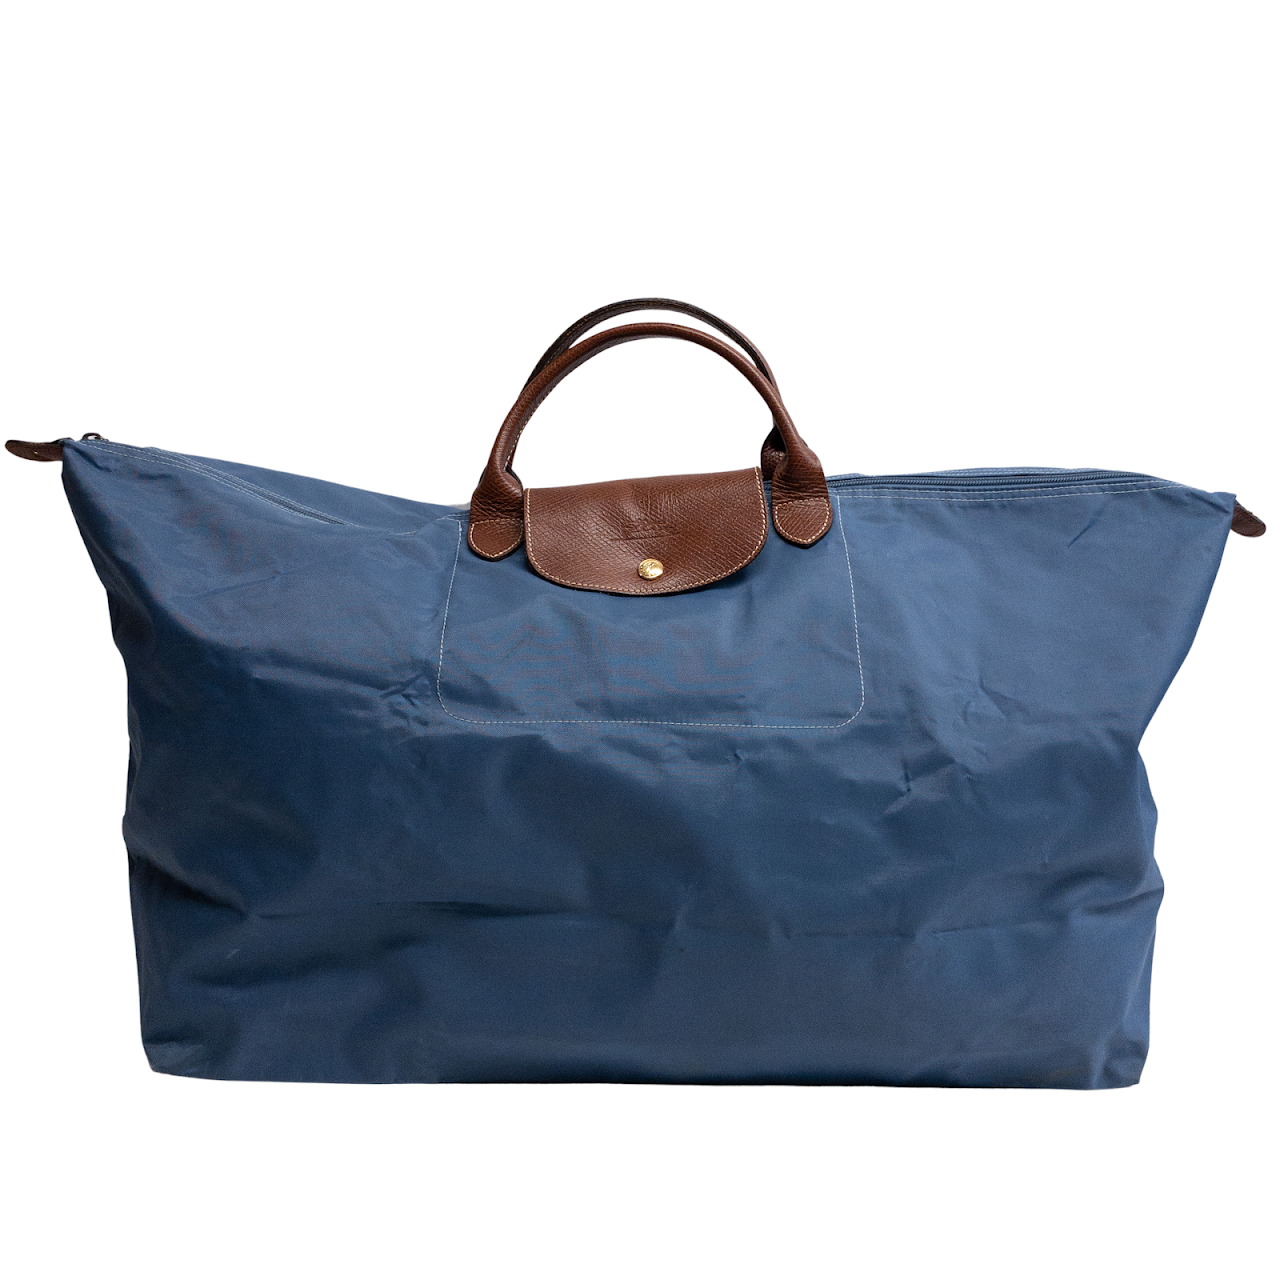 Longchamp Large Le Pliage Tote Bag